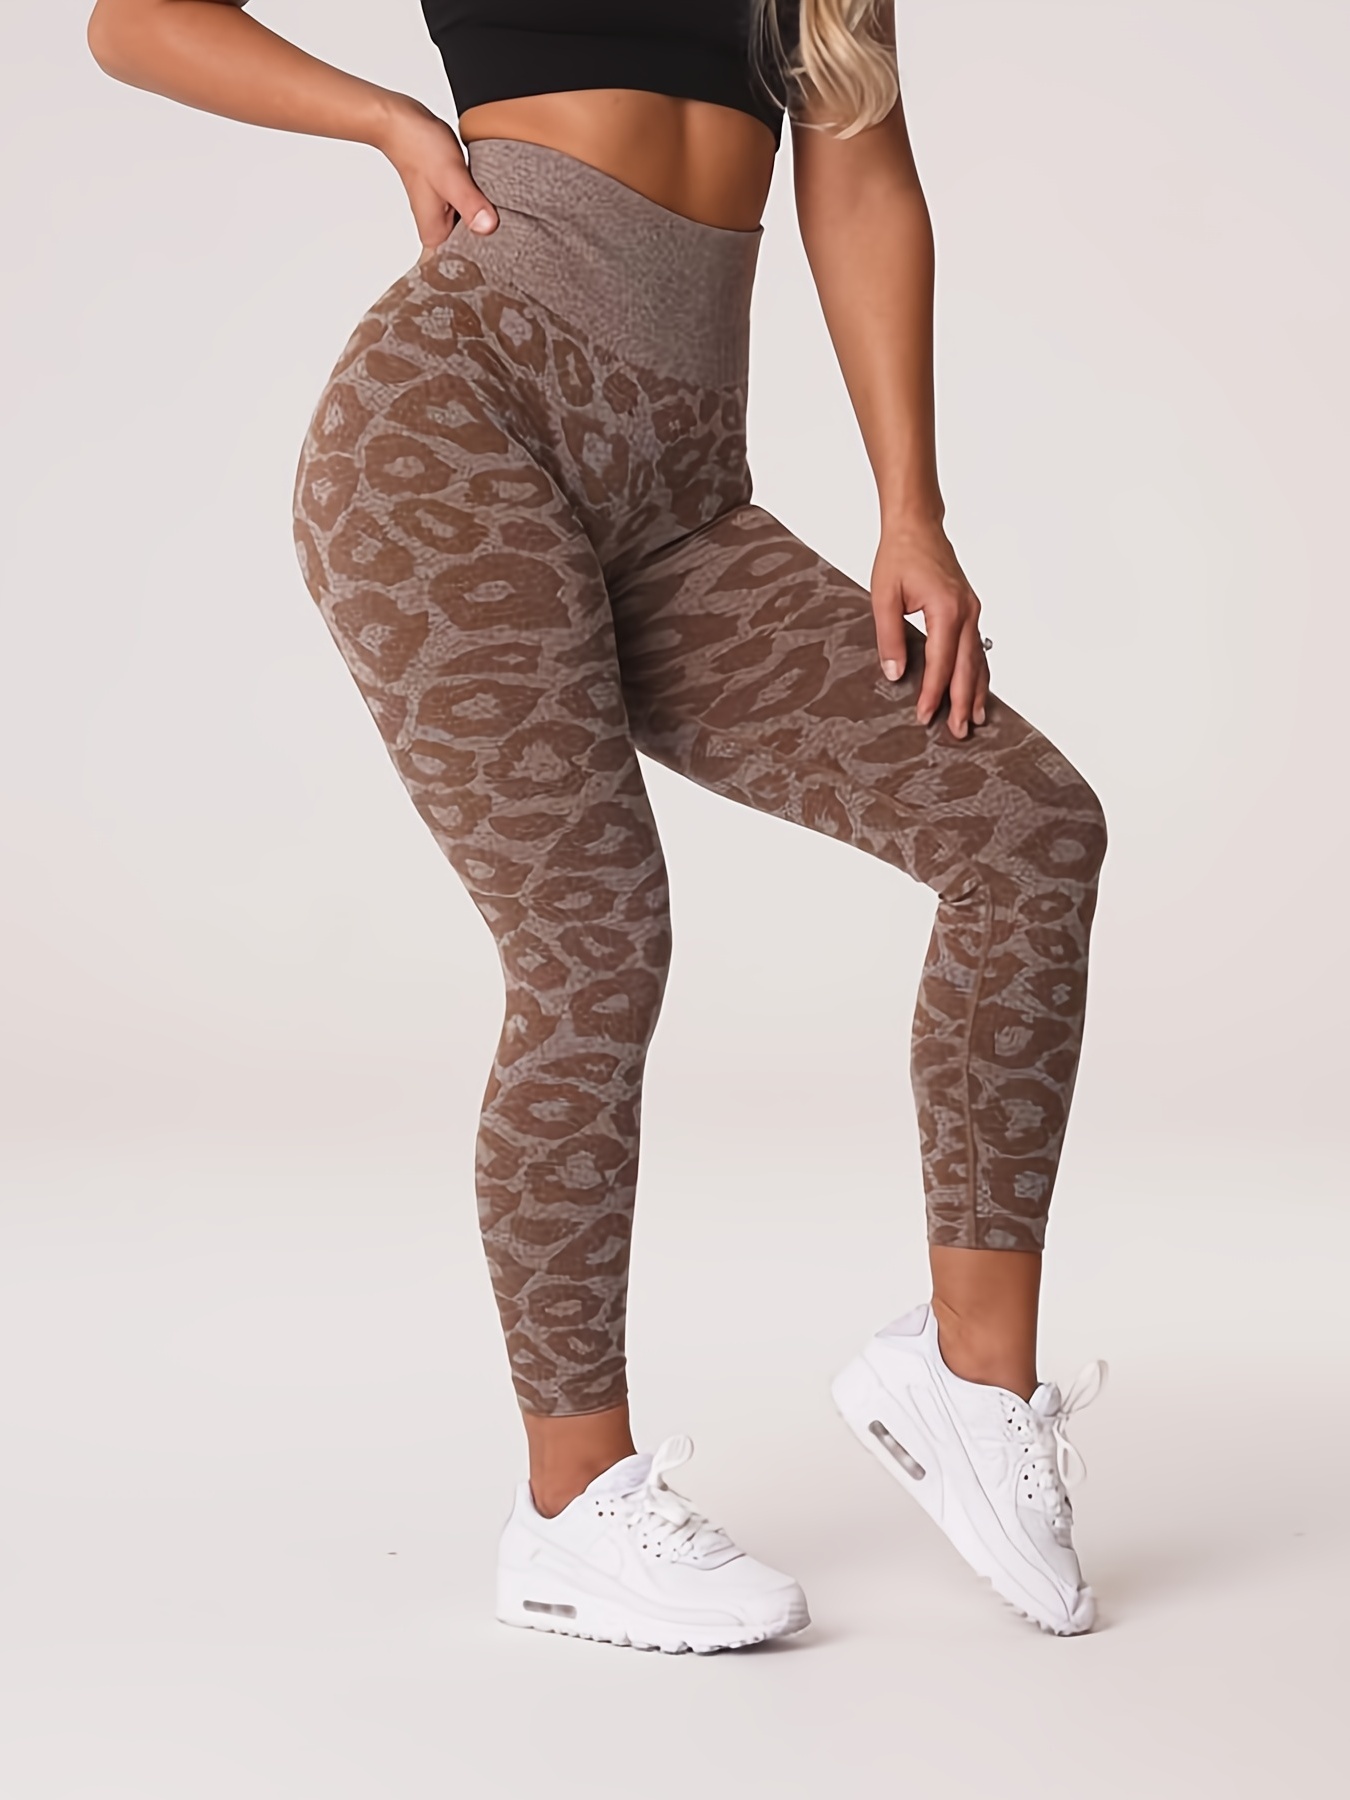 evolution and creation leggings small leopard animal print soft Stretch yoga